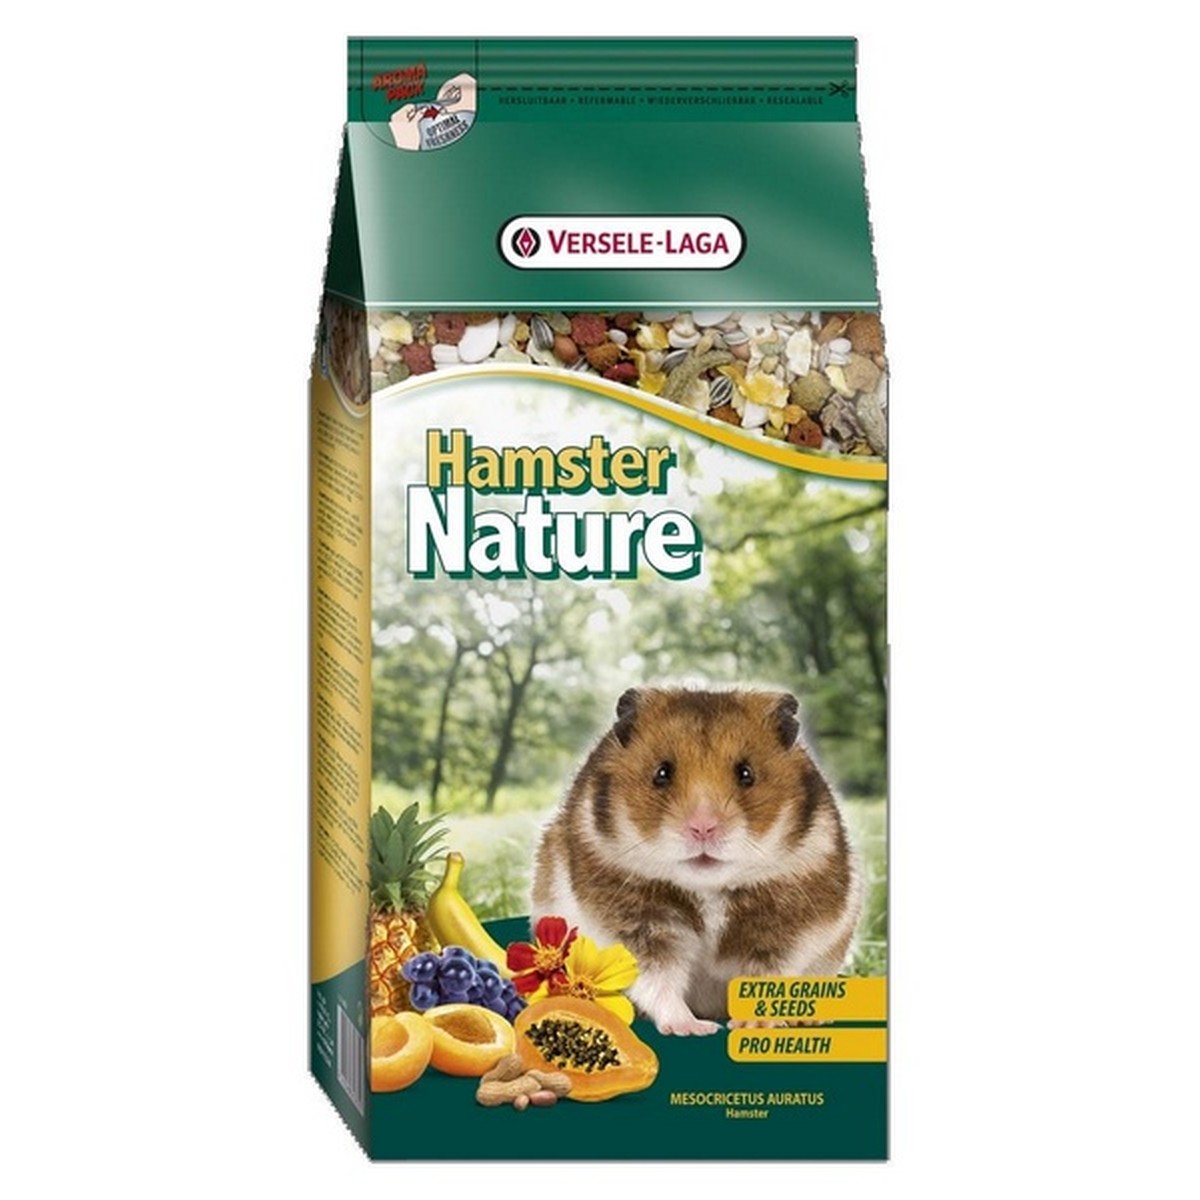   Hamster Nature 750 g  750g